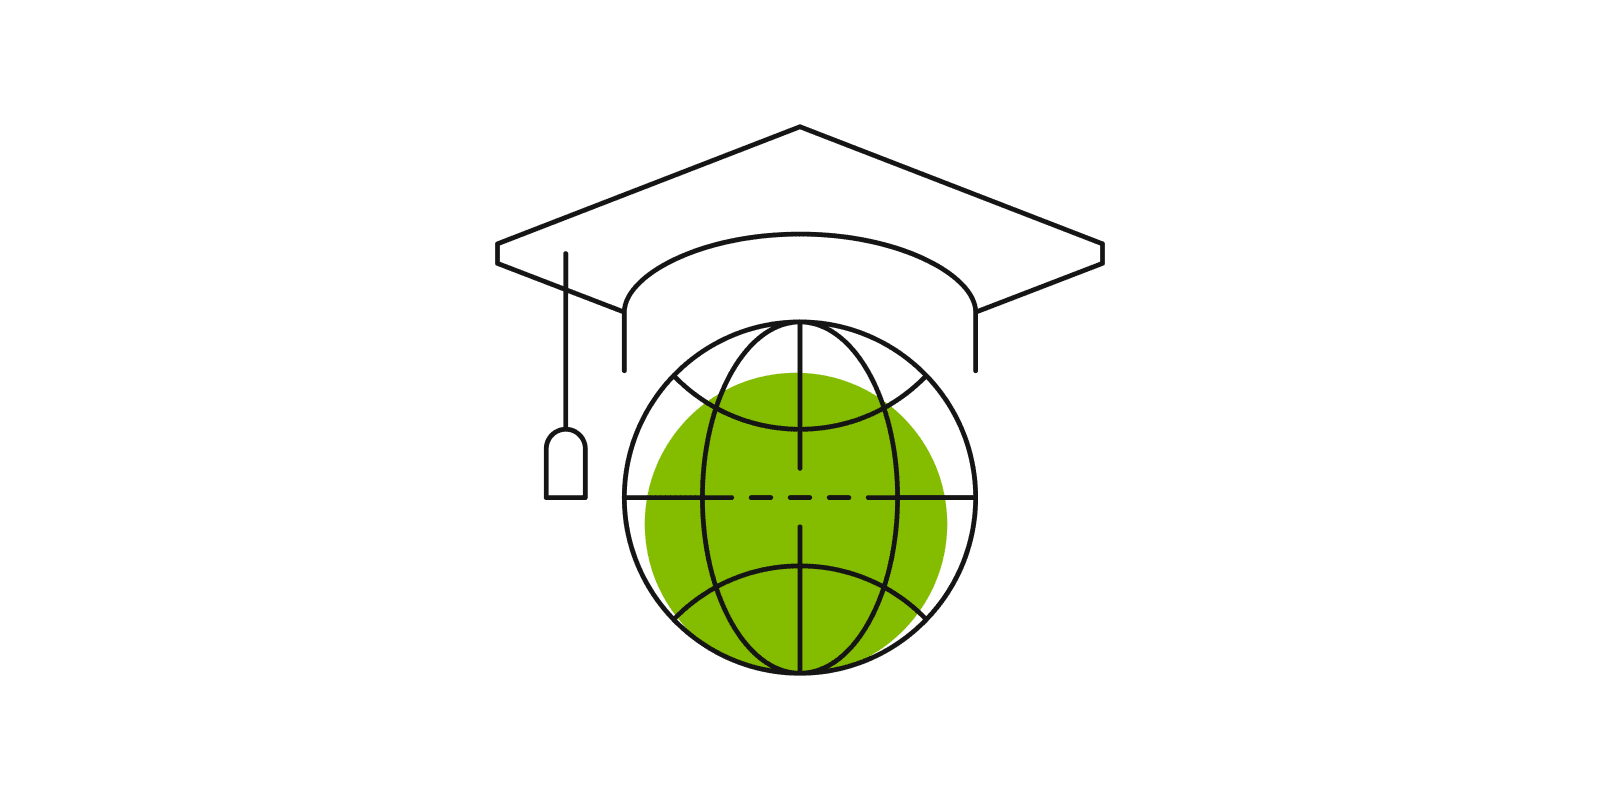 Illustration of a globe wearing a graduation cap